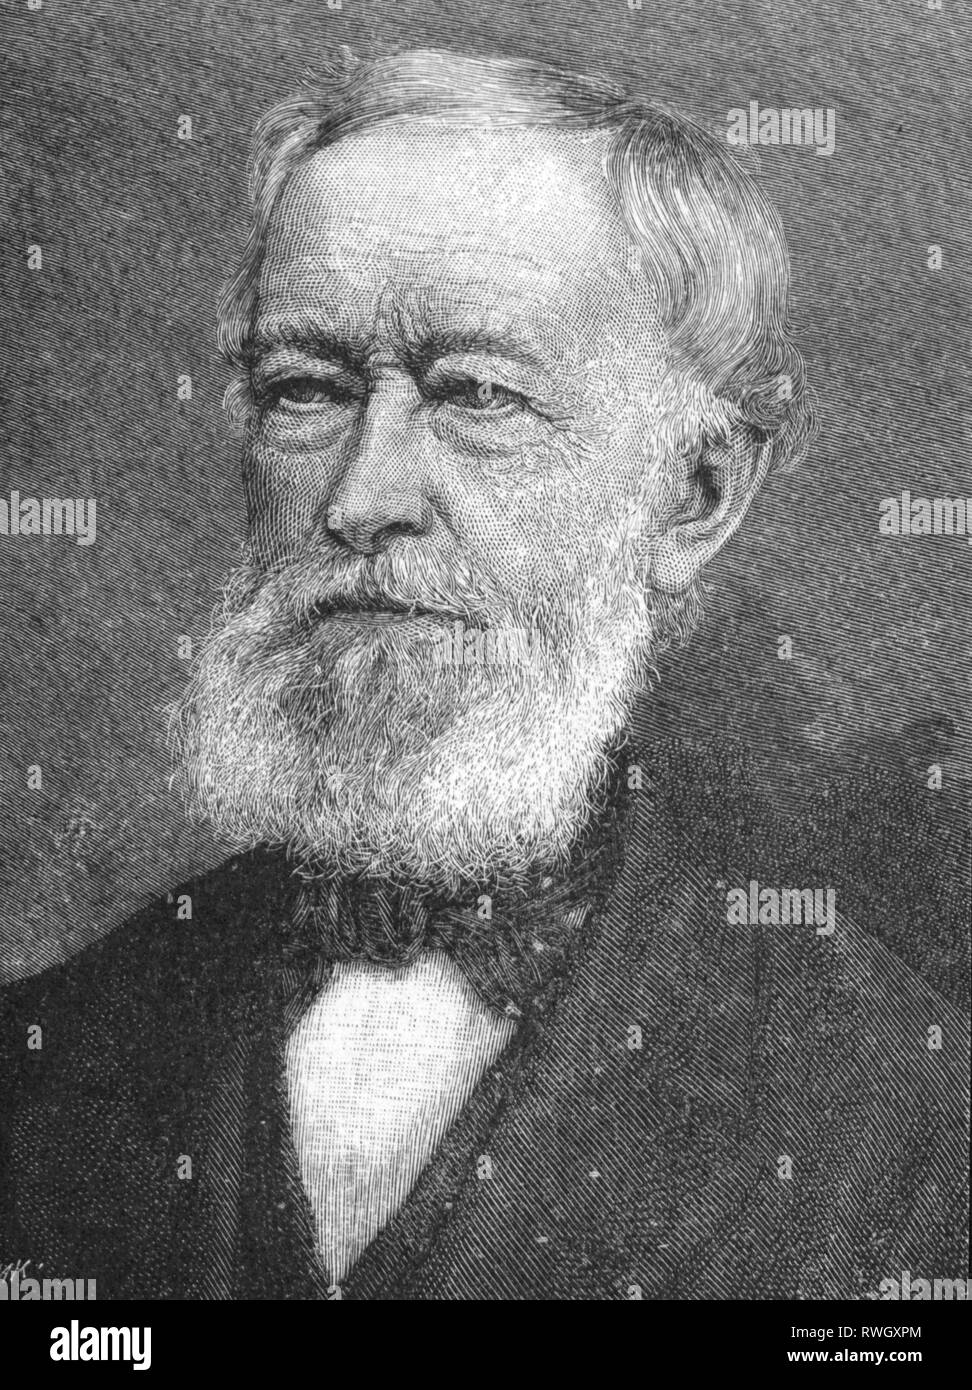 Krupp, Alfred, 11.4.1812 - 14.7.1887, l'industriel allemand, portrait, gravure sur bois, vers 1880, Additional-Rights Clearance-Info-Not-Available- Banque D'Images